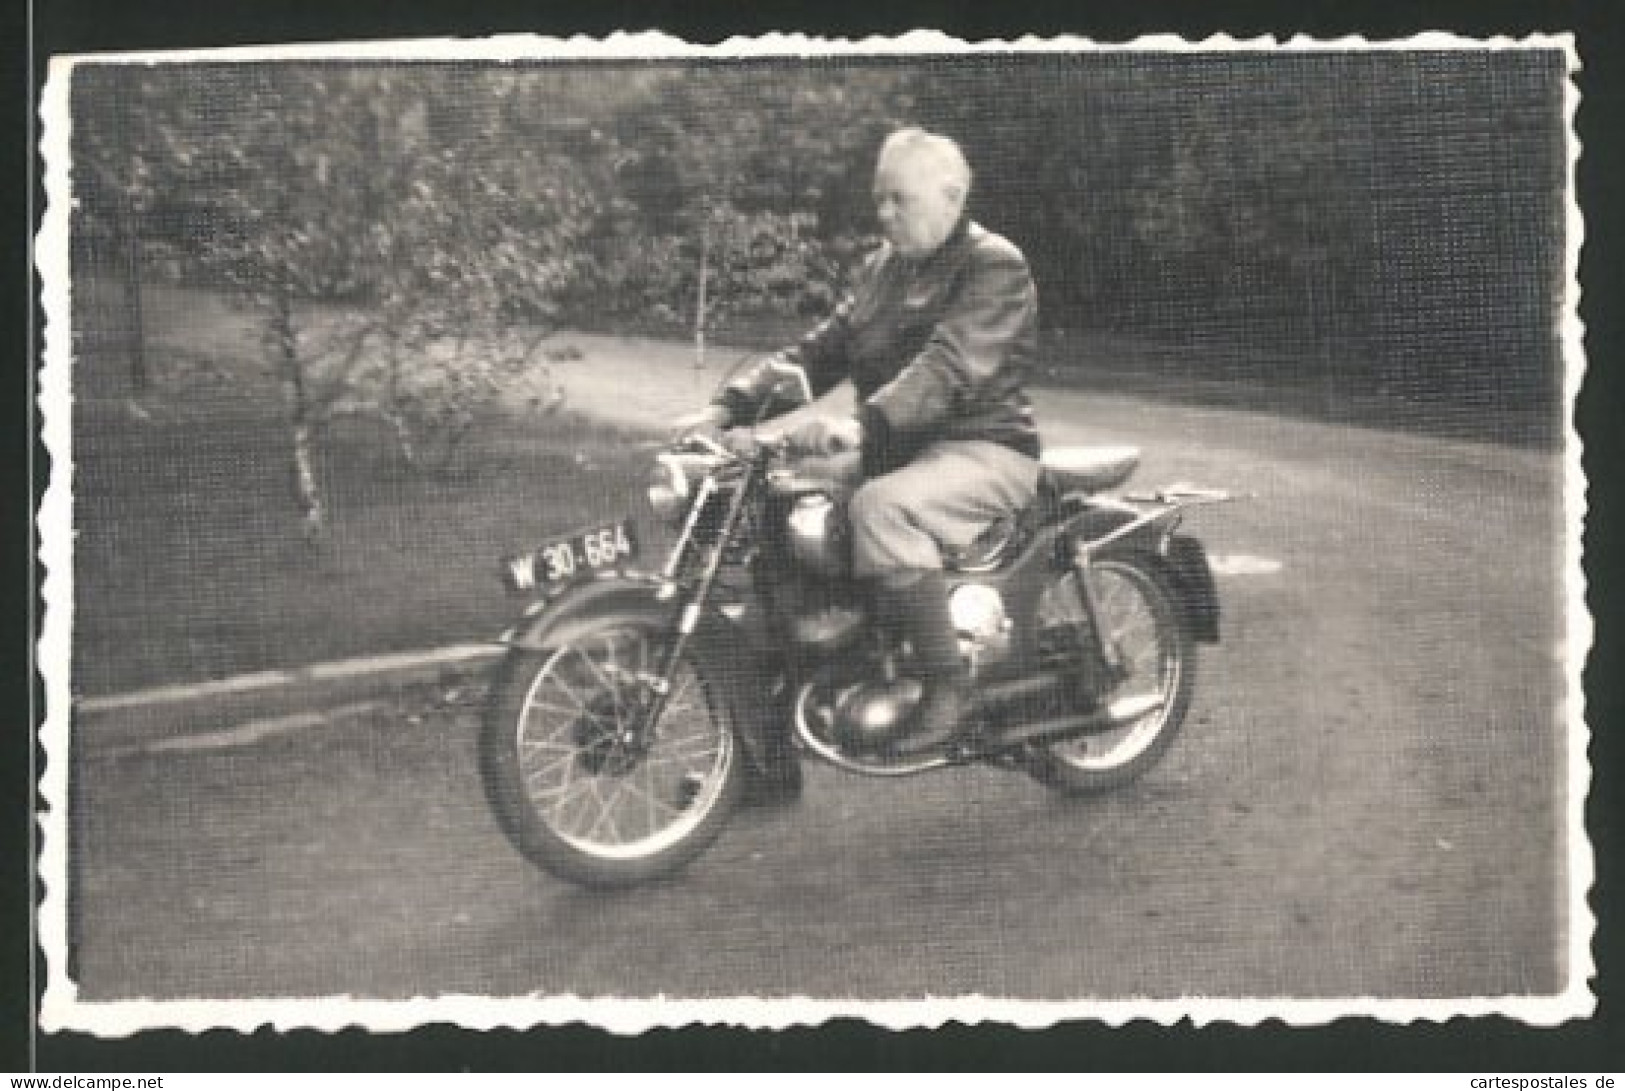 Fotografie Motorrad, Fahrer Auf Krad Bei Brunn 1955  - Automobile